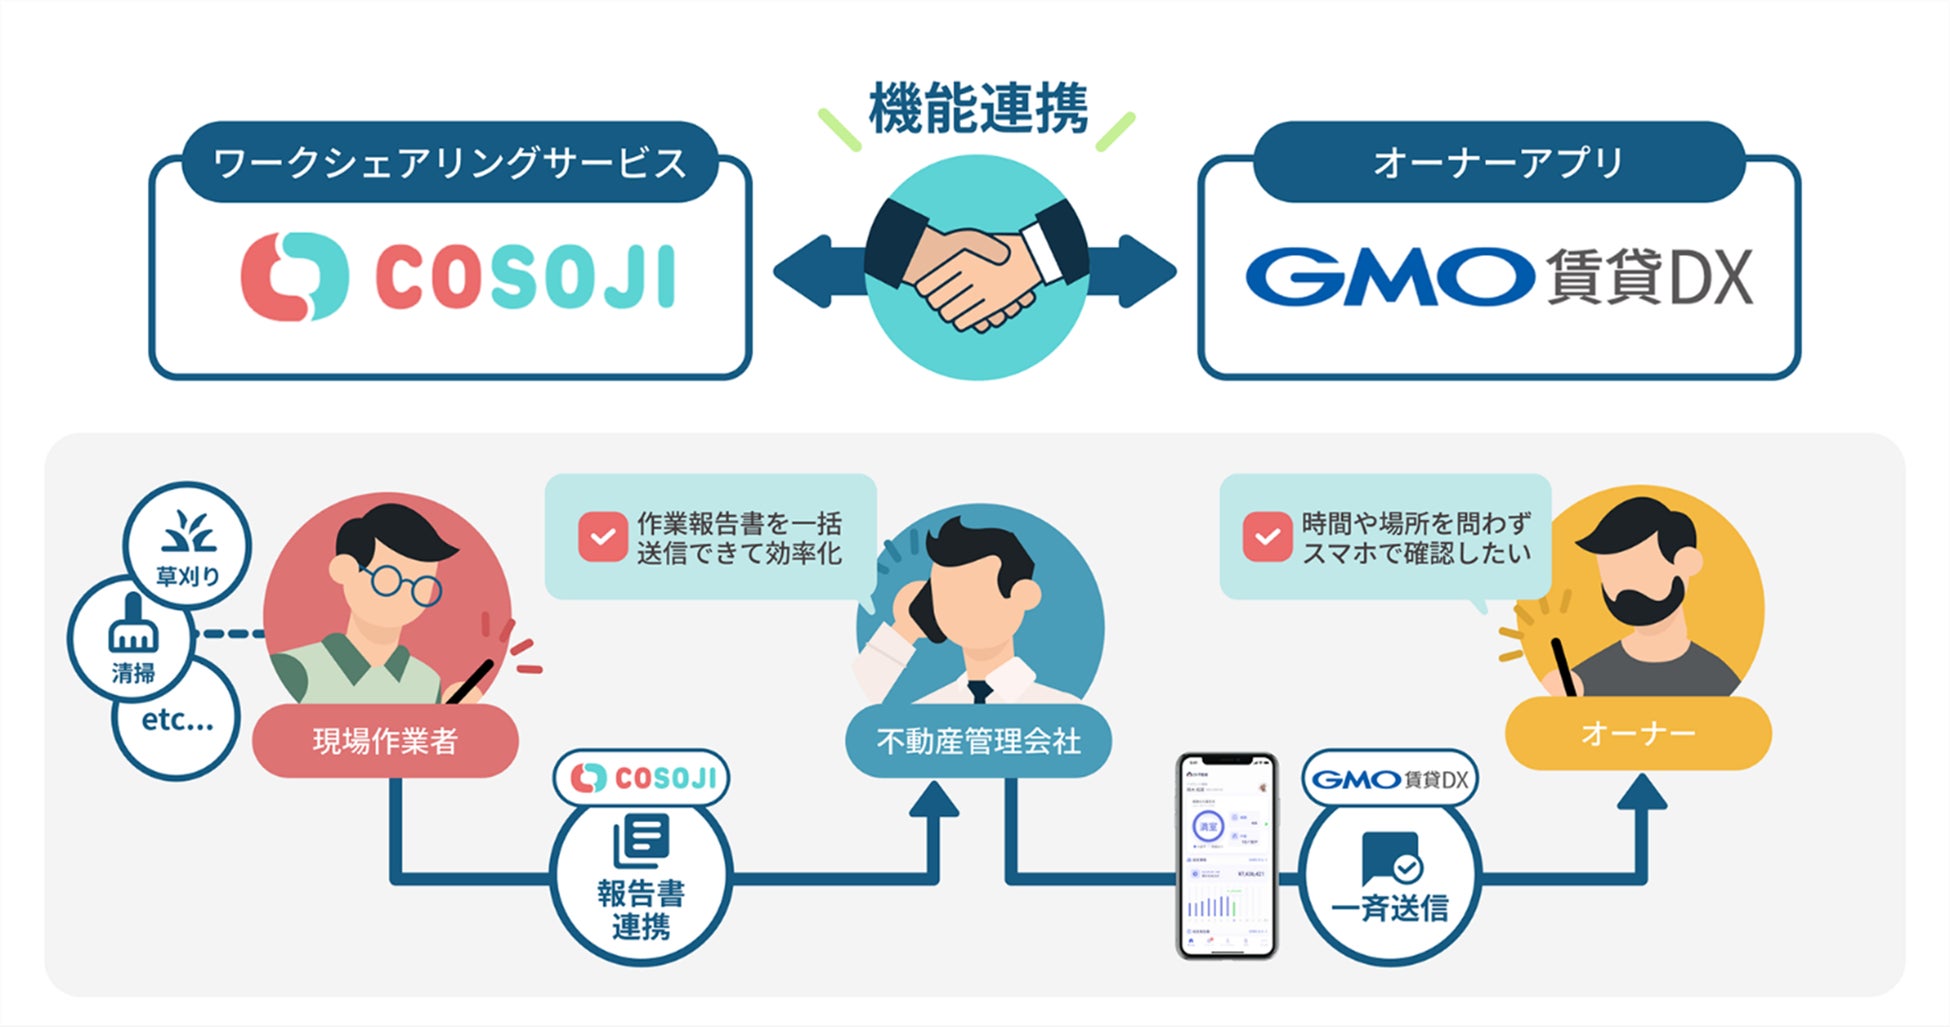 「GMO賃貸DX オーナーアプリ」を提供するGMO ReTechと「COSOJI」を提供するRsmileが連携開始【GMO ReTech】のサブ画像1